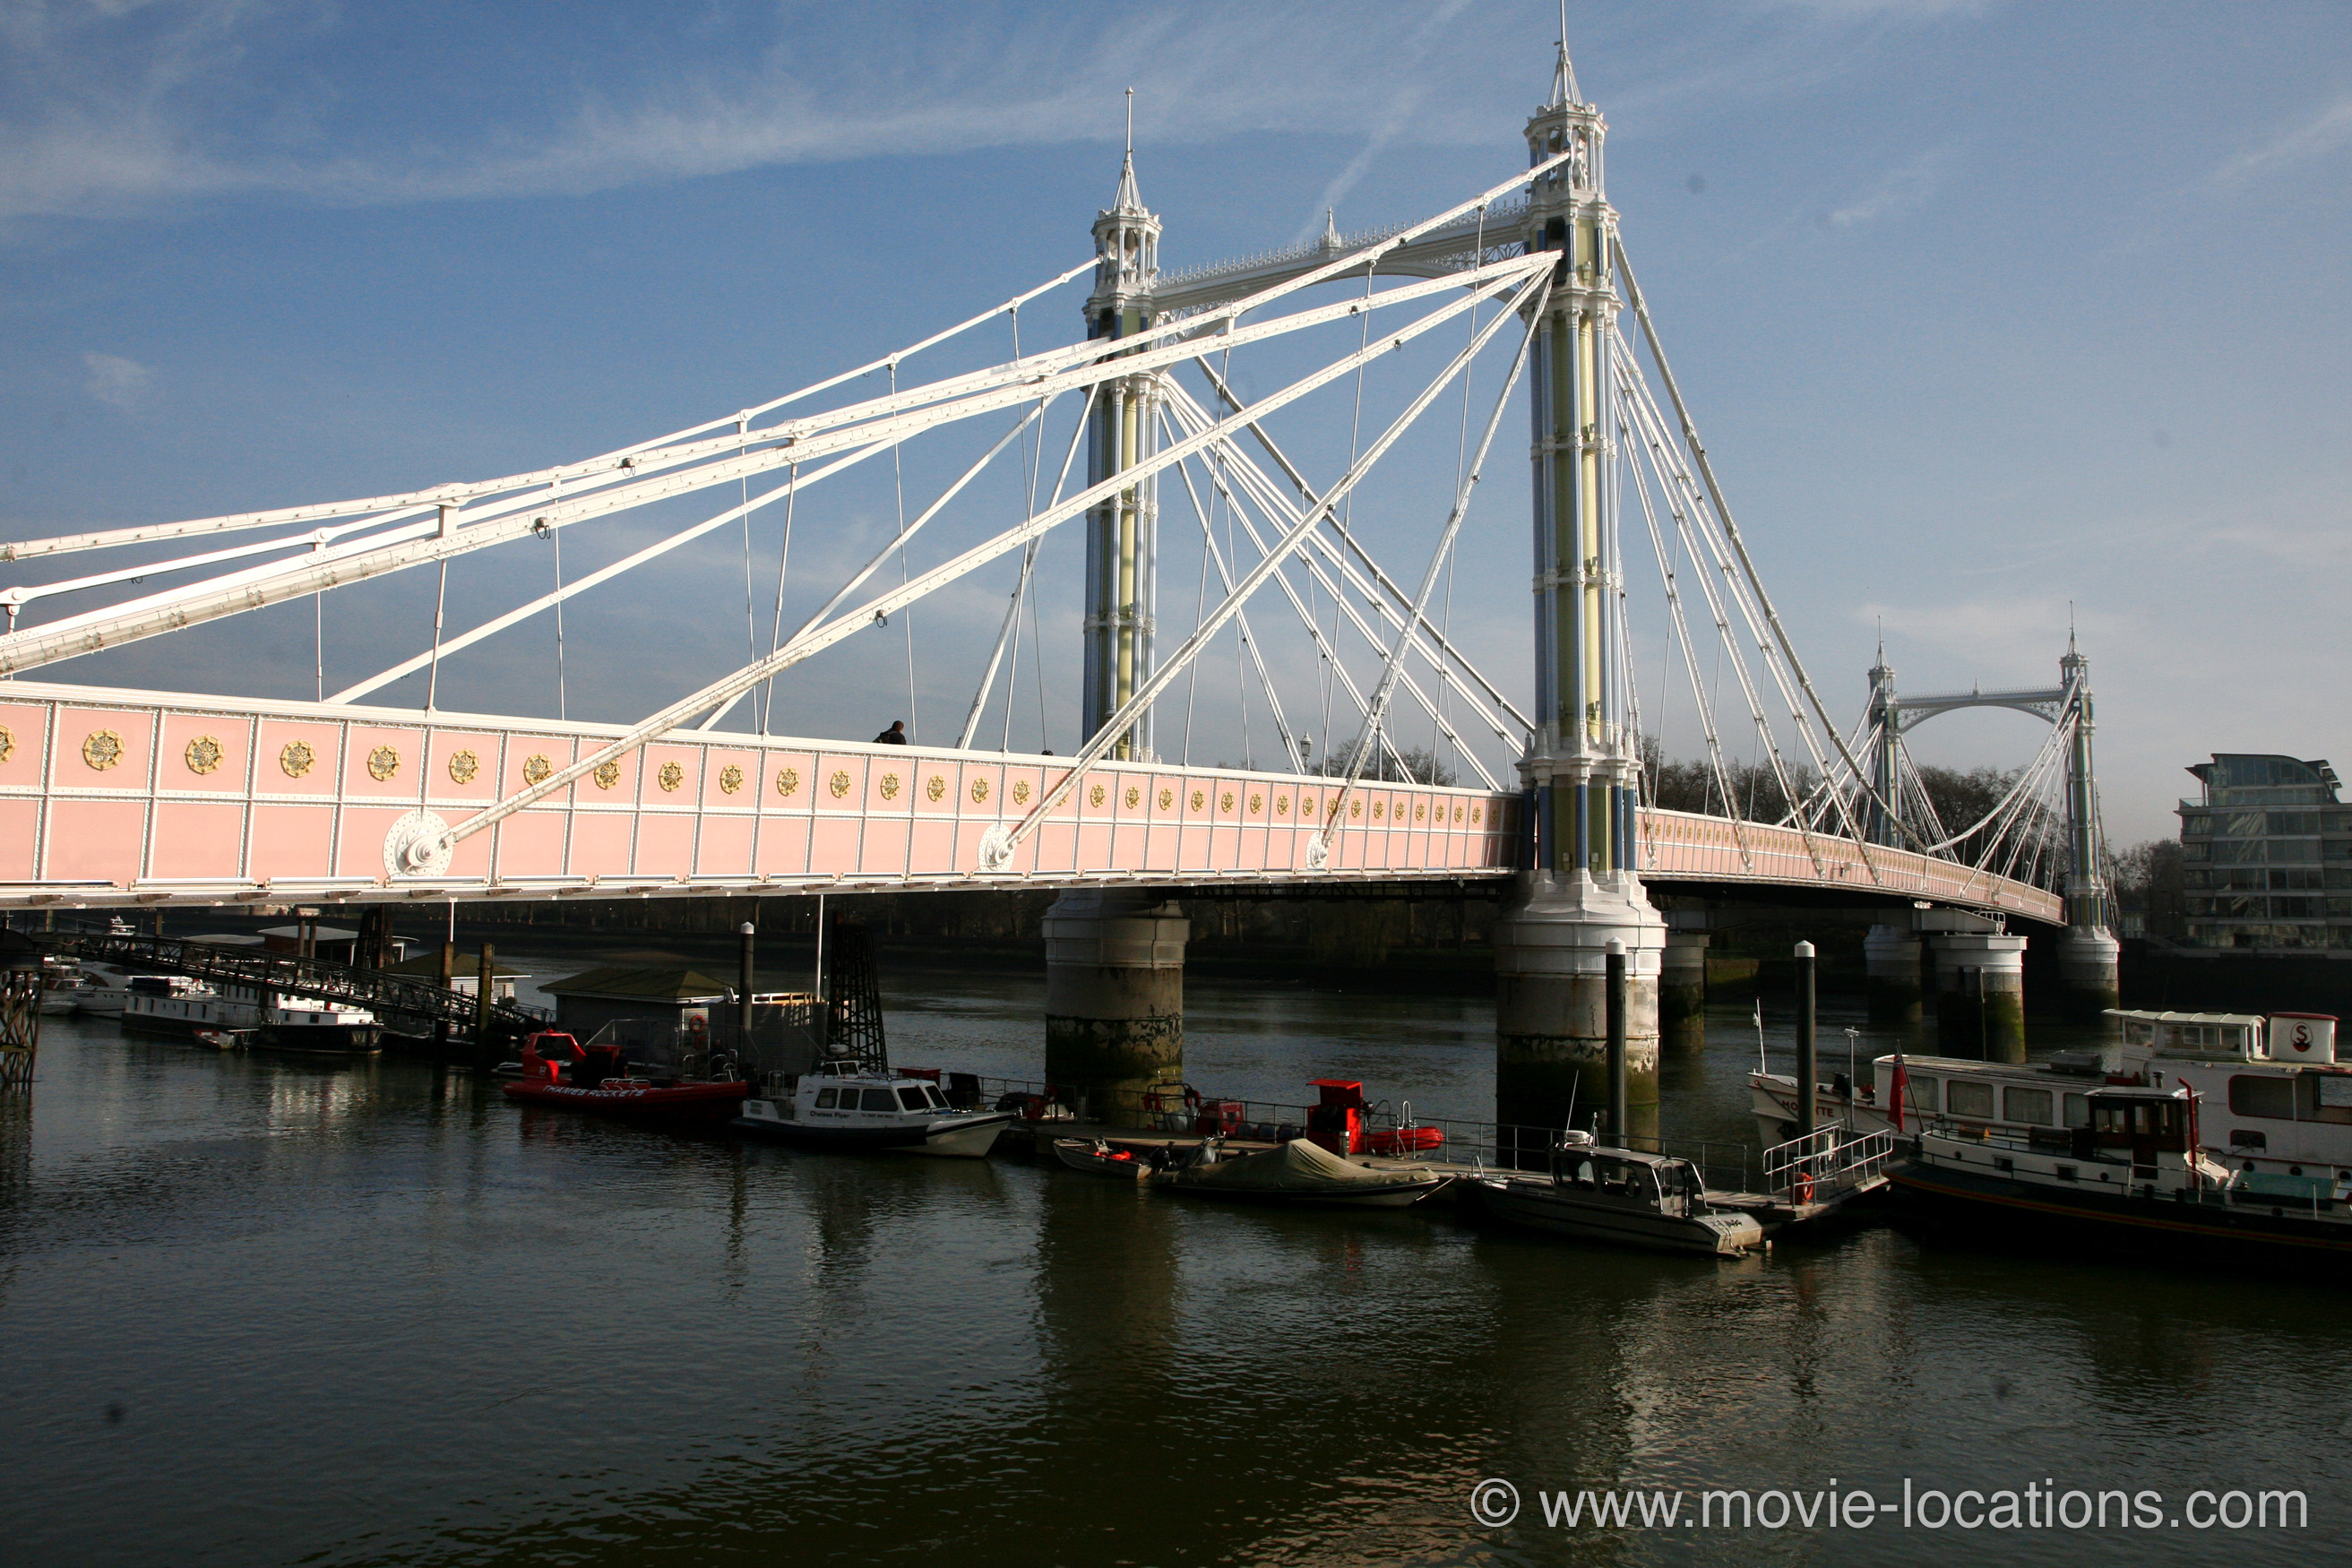 Absolute Beginners film location: Albert Bridge, Chelsea, London SW11